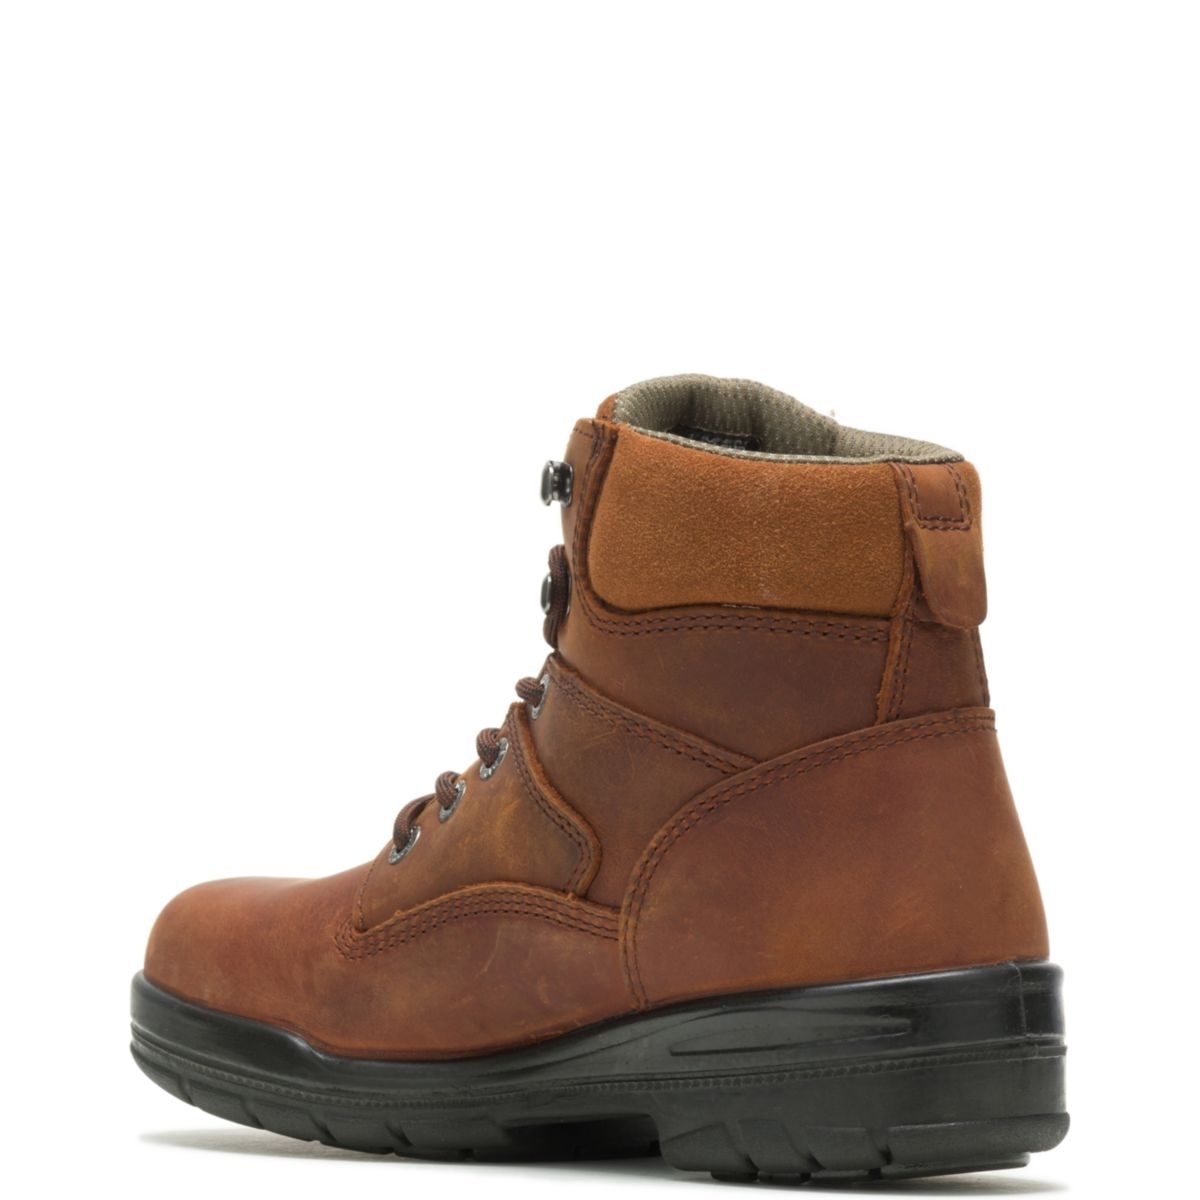 WOLVERINE Men's 6 DuraShocksÂ® Slip Resistant Steel Toe Work Boot Canyon - W02053 BRN/STL - BRN/STL, 8